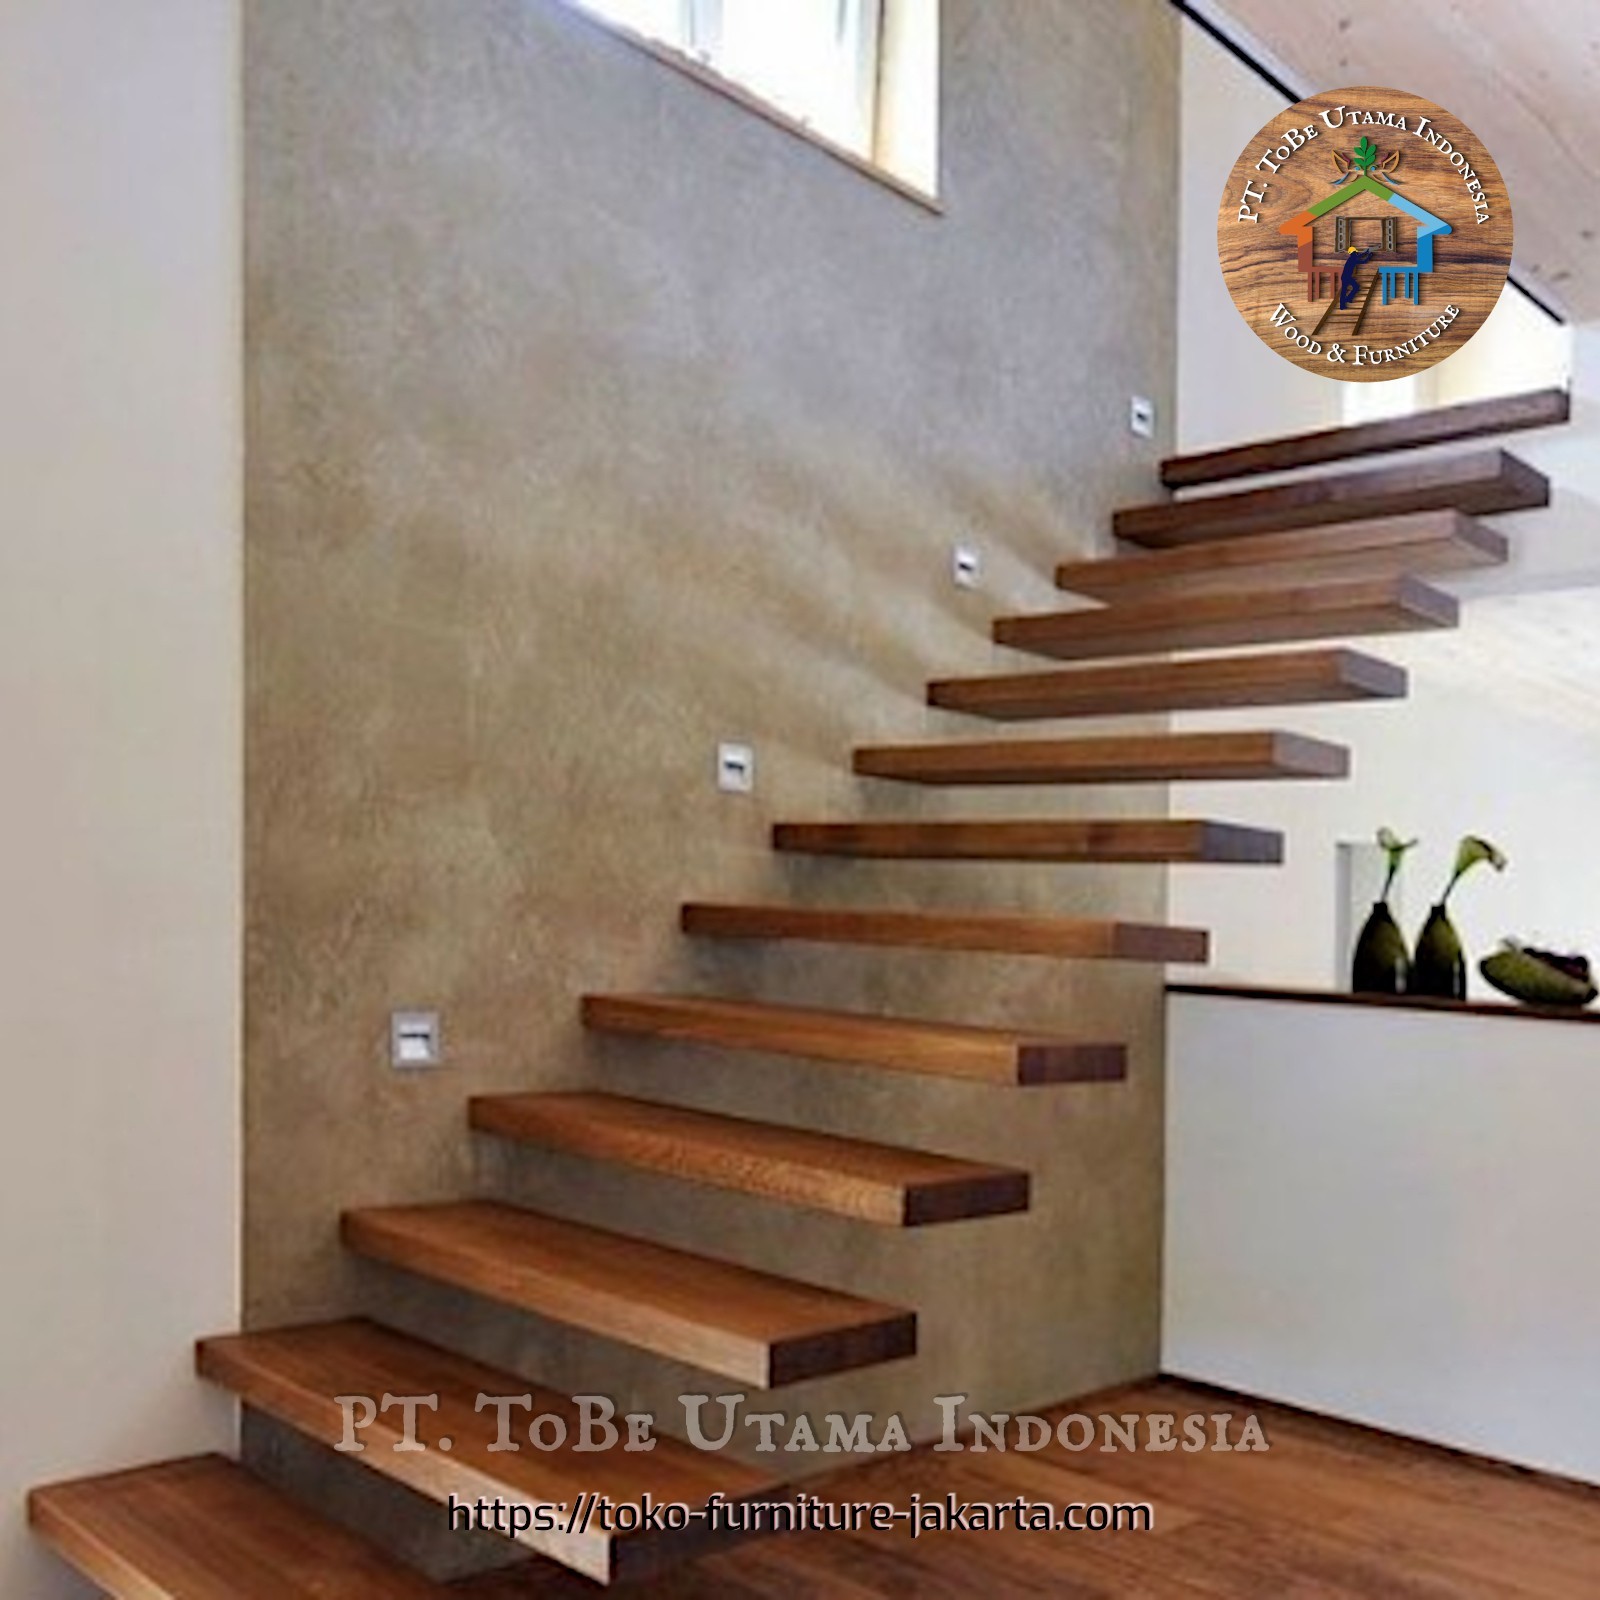 Stairs: Stair Treads made of teakwood, mahogany wood, trembesi wood (image 1 of 1).